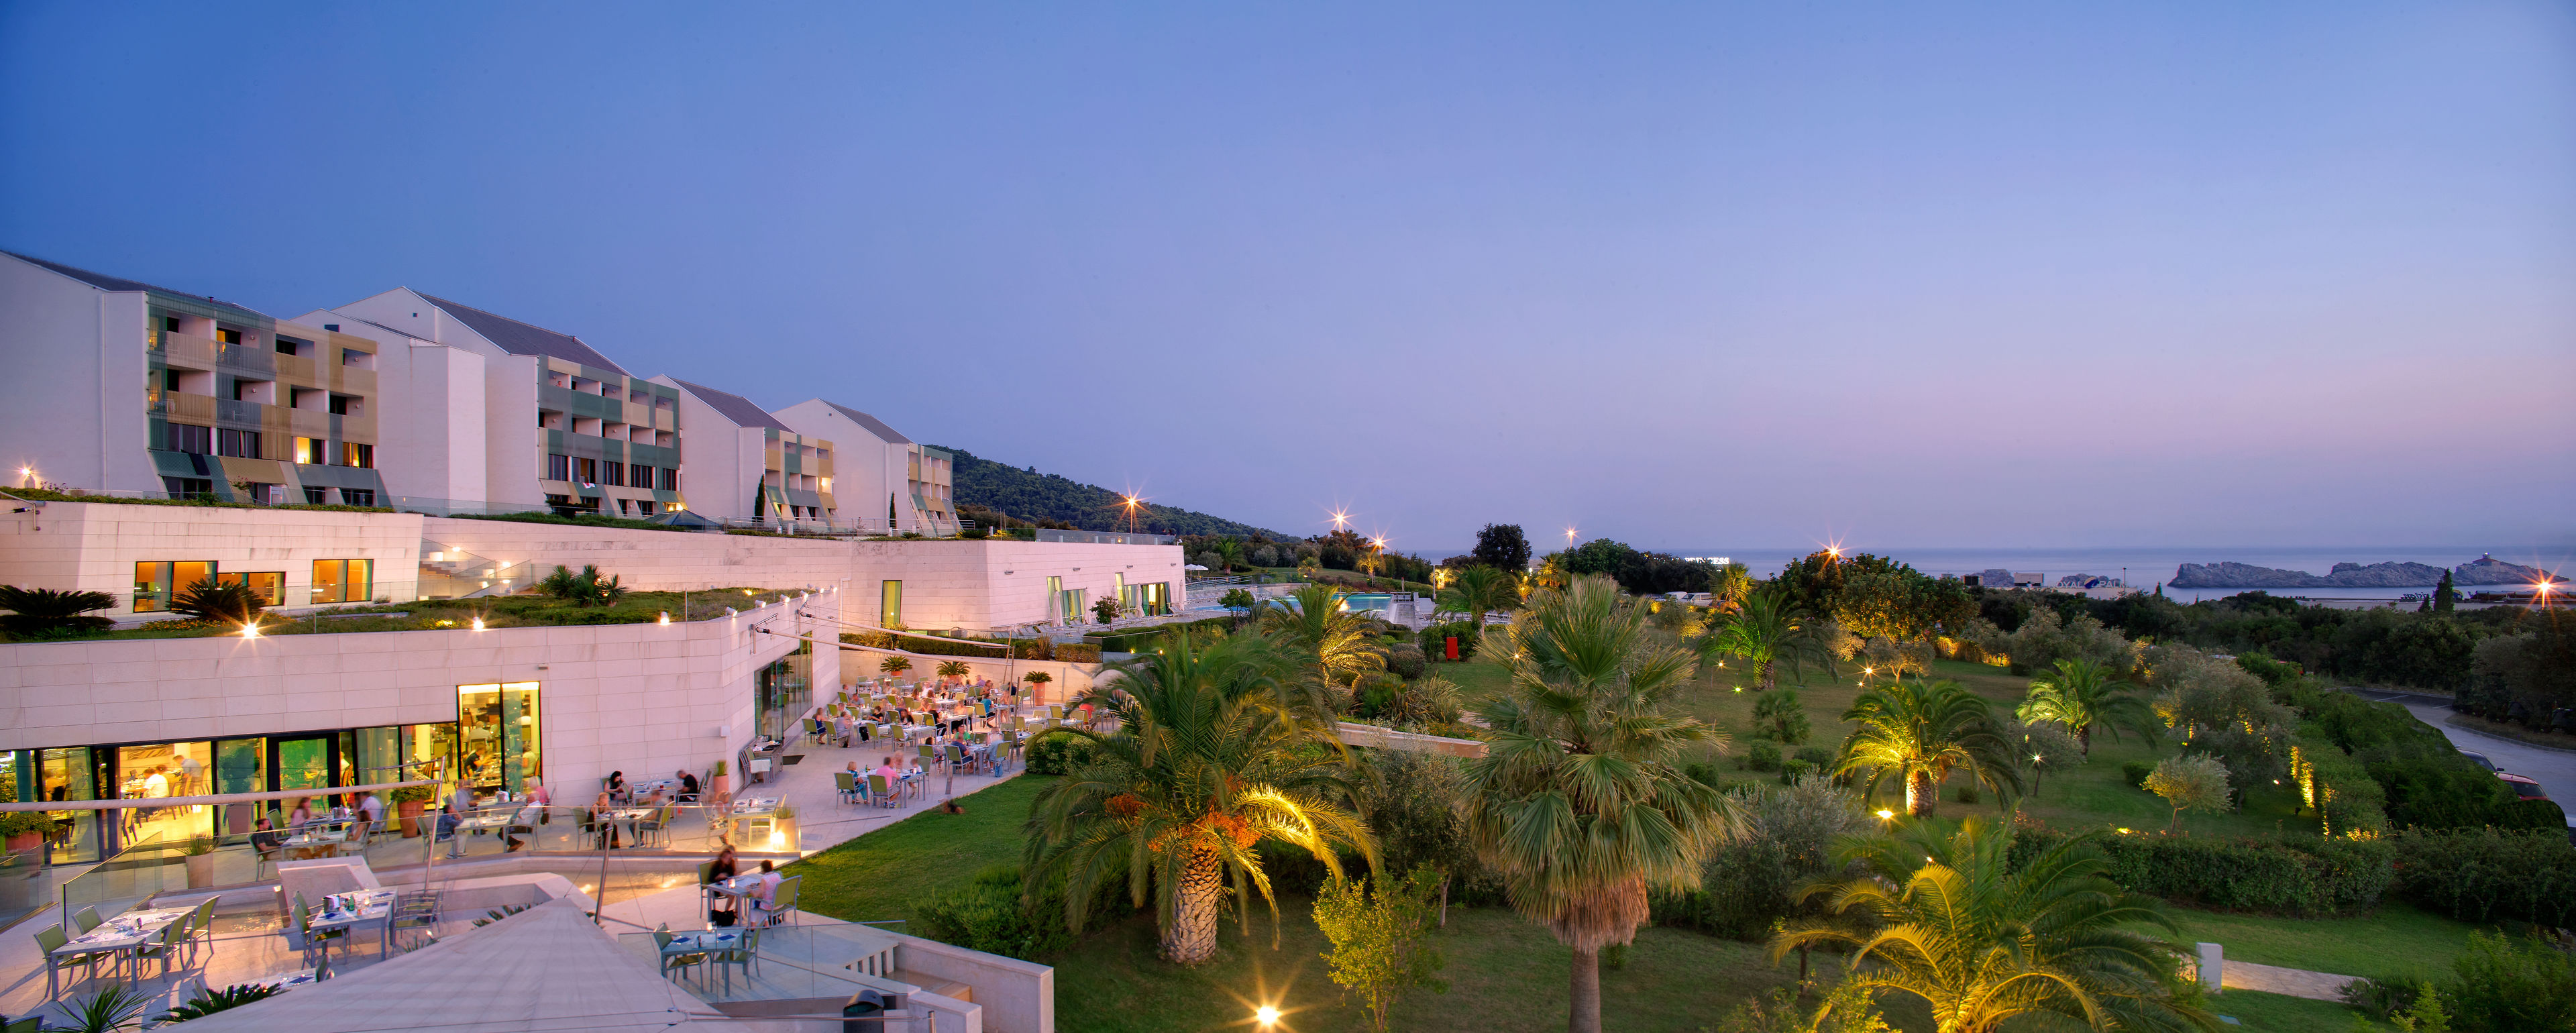 Valamar Lacroma Dubrovnik Hotel